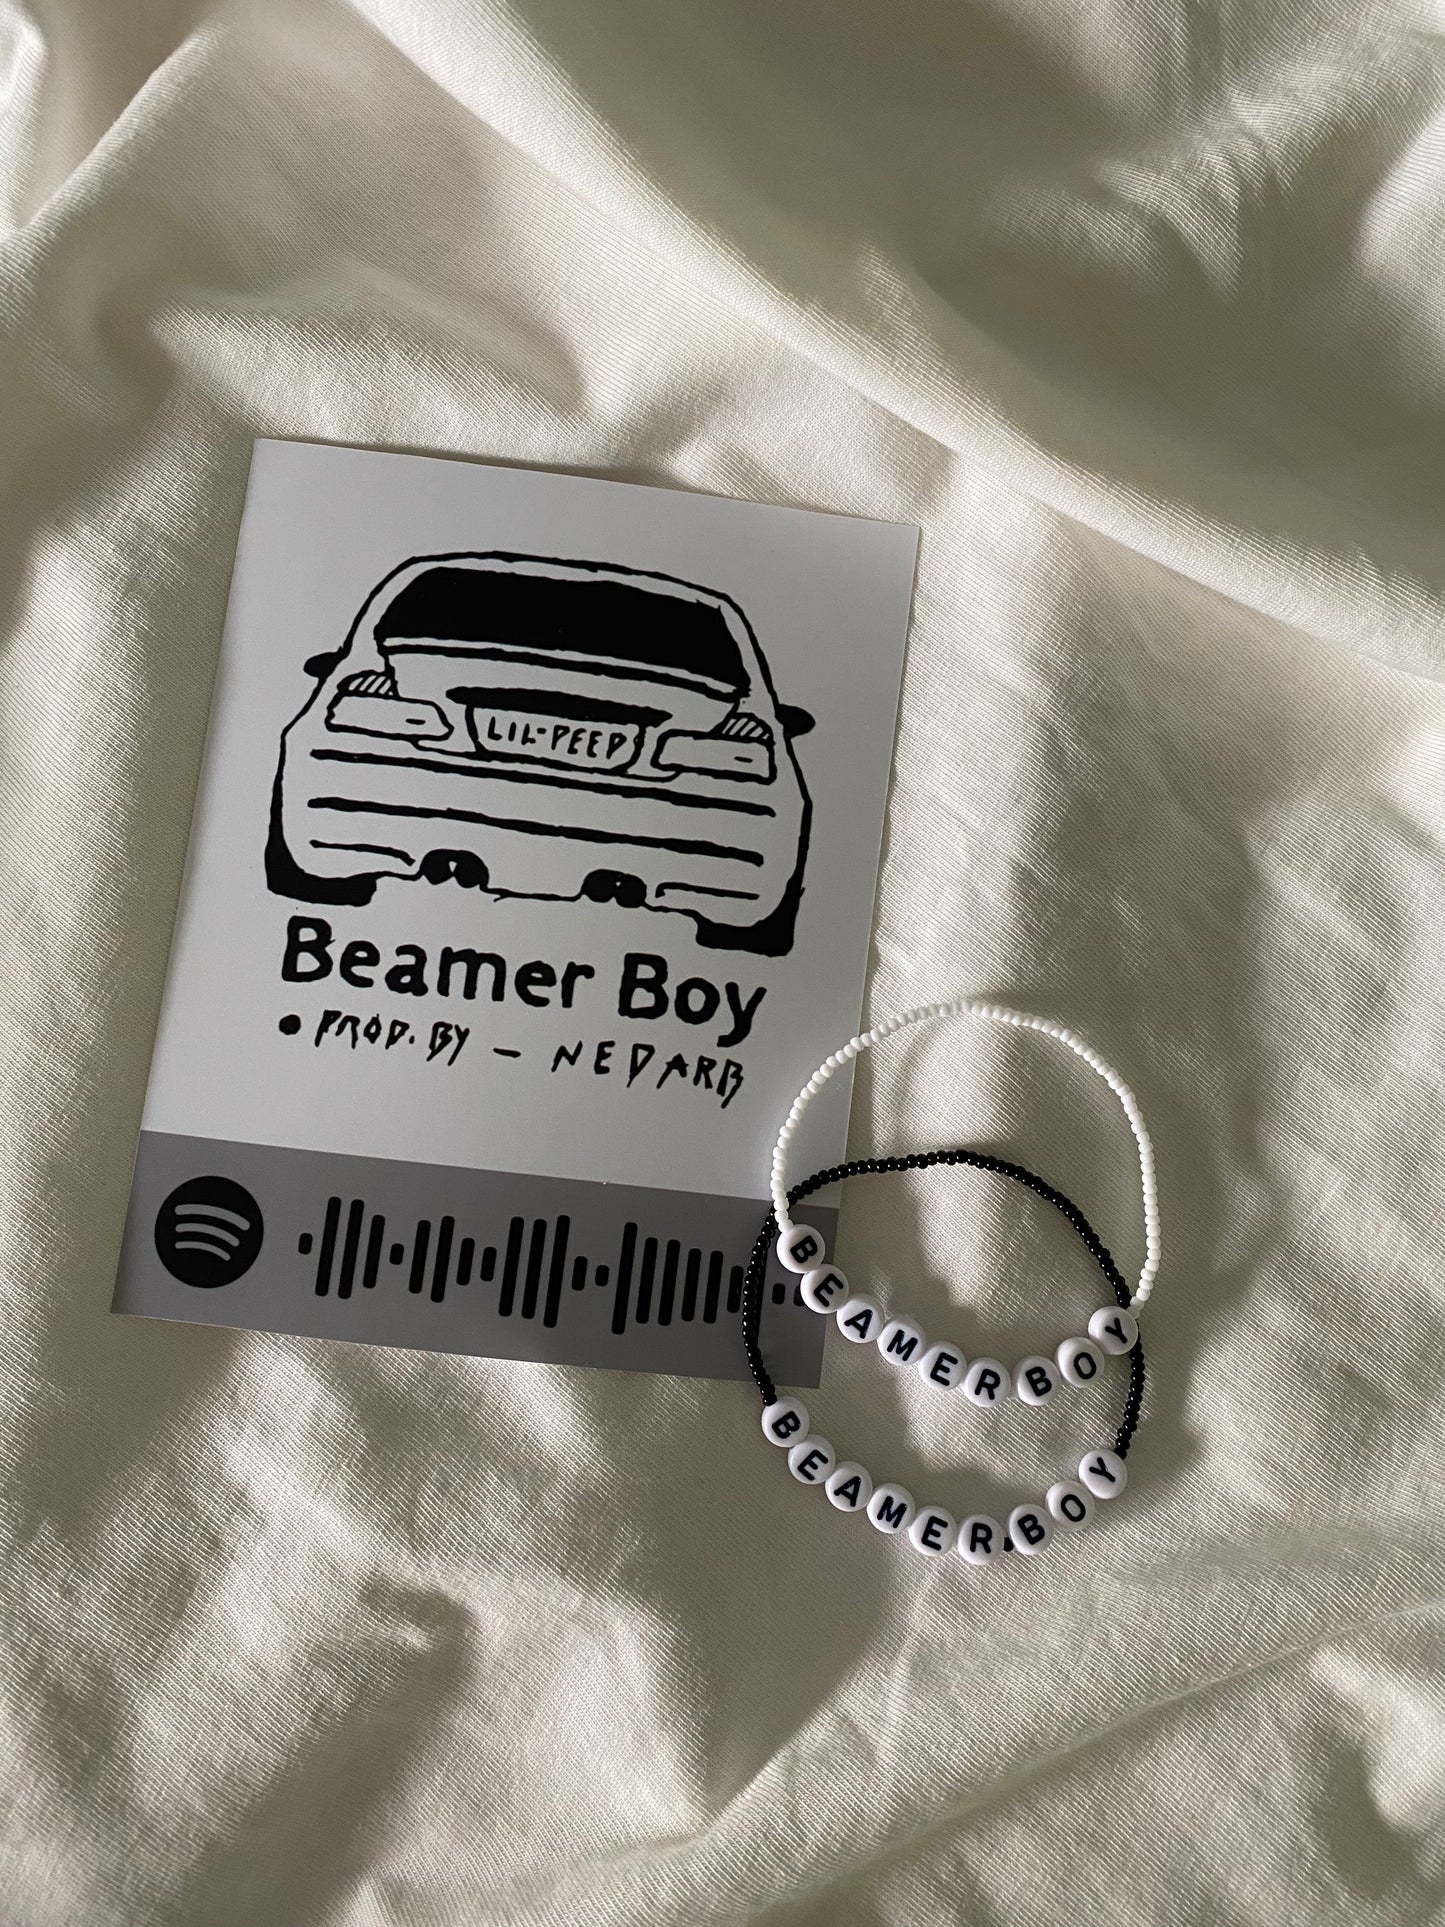 Beamer Boy matching bracelets